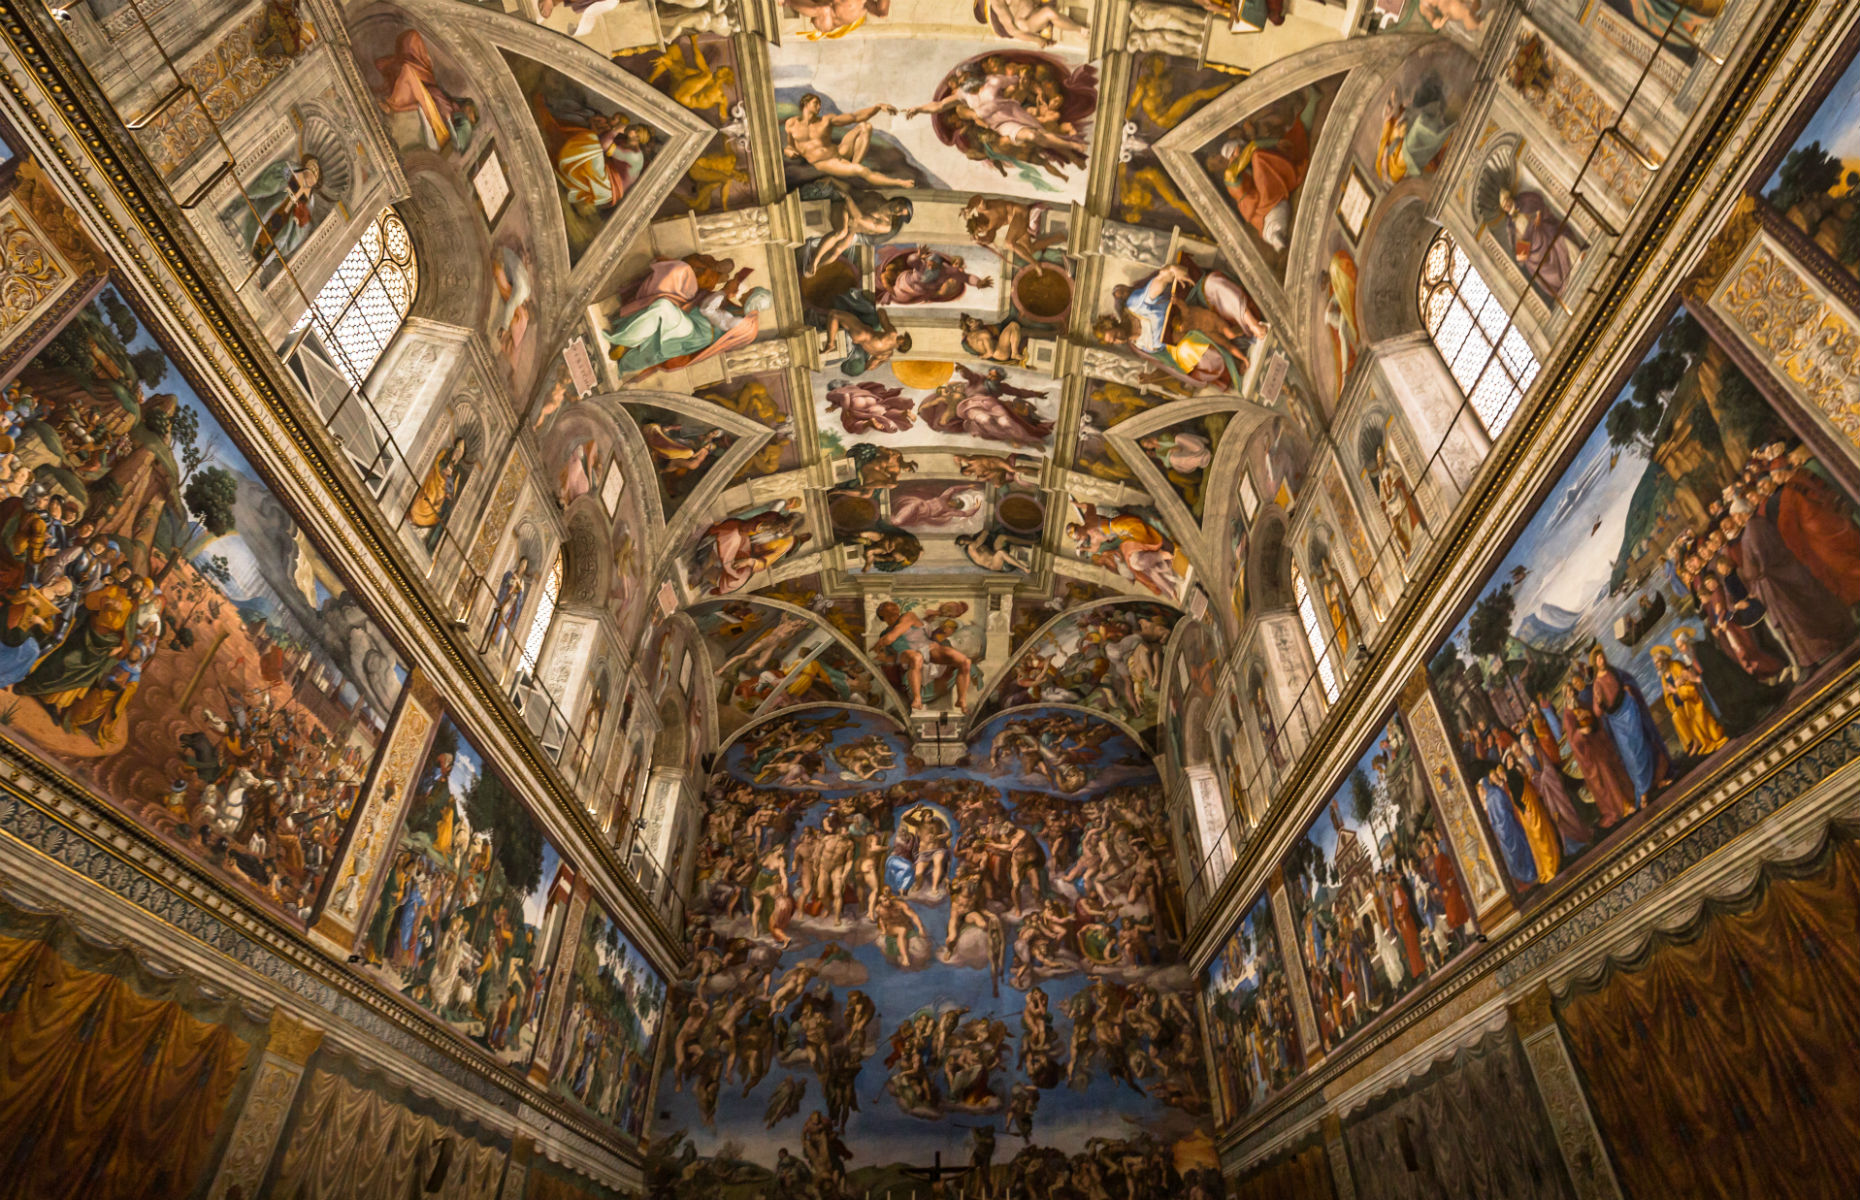 Sistine Chapel (Image: RPBaiao/Shutterstock)